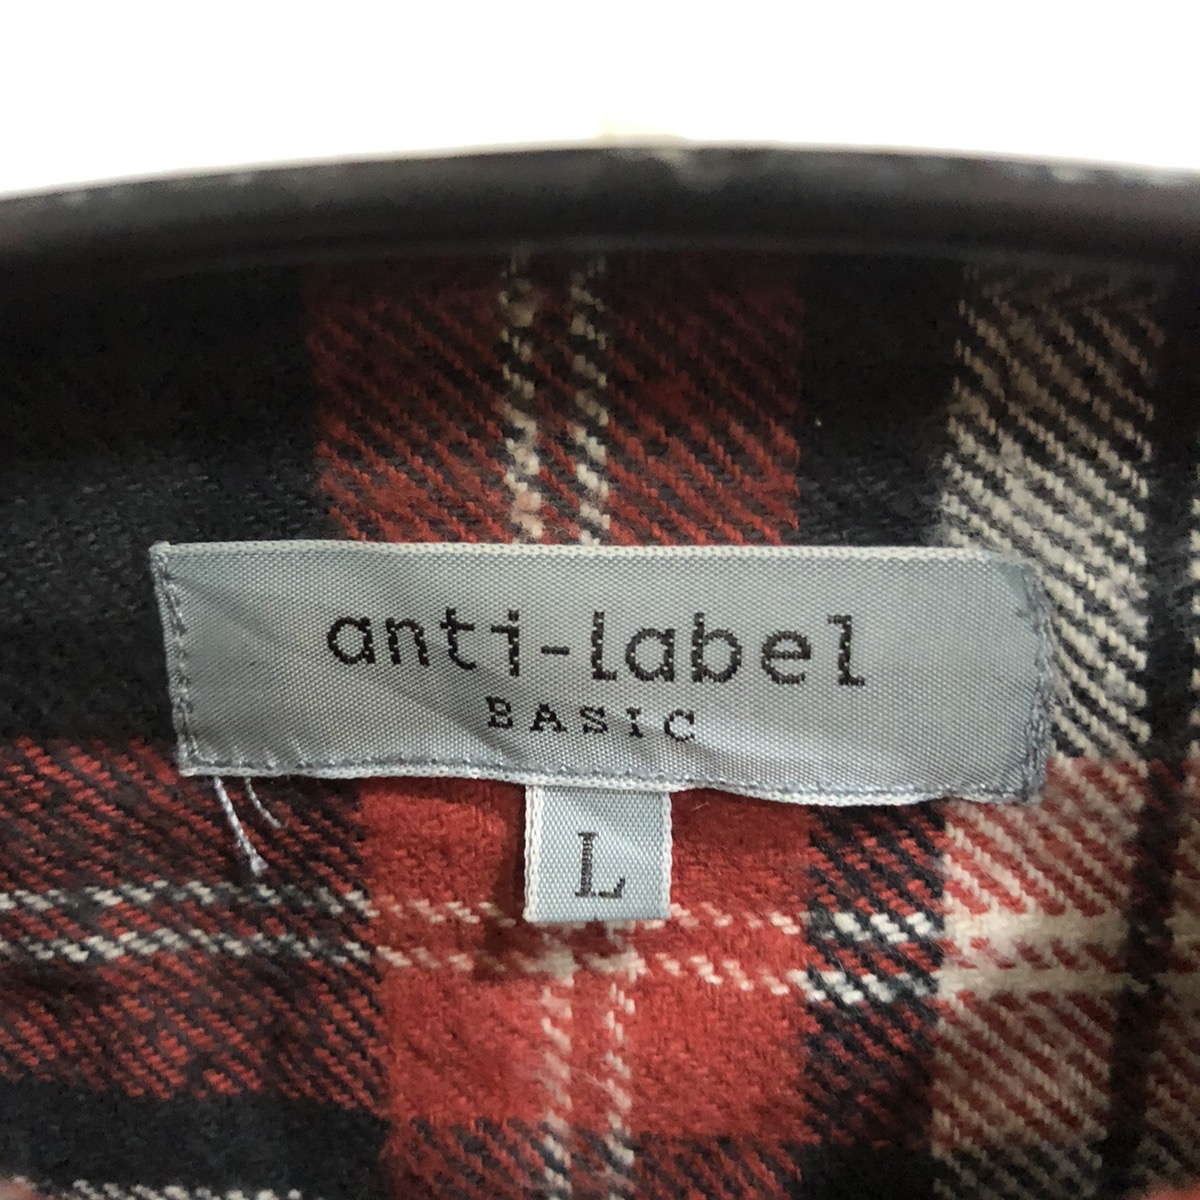 Japanese Brand - Japanese Brand Anti-Label Plaid tartan Flannel Shirt 👕 - 4